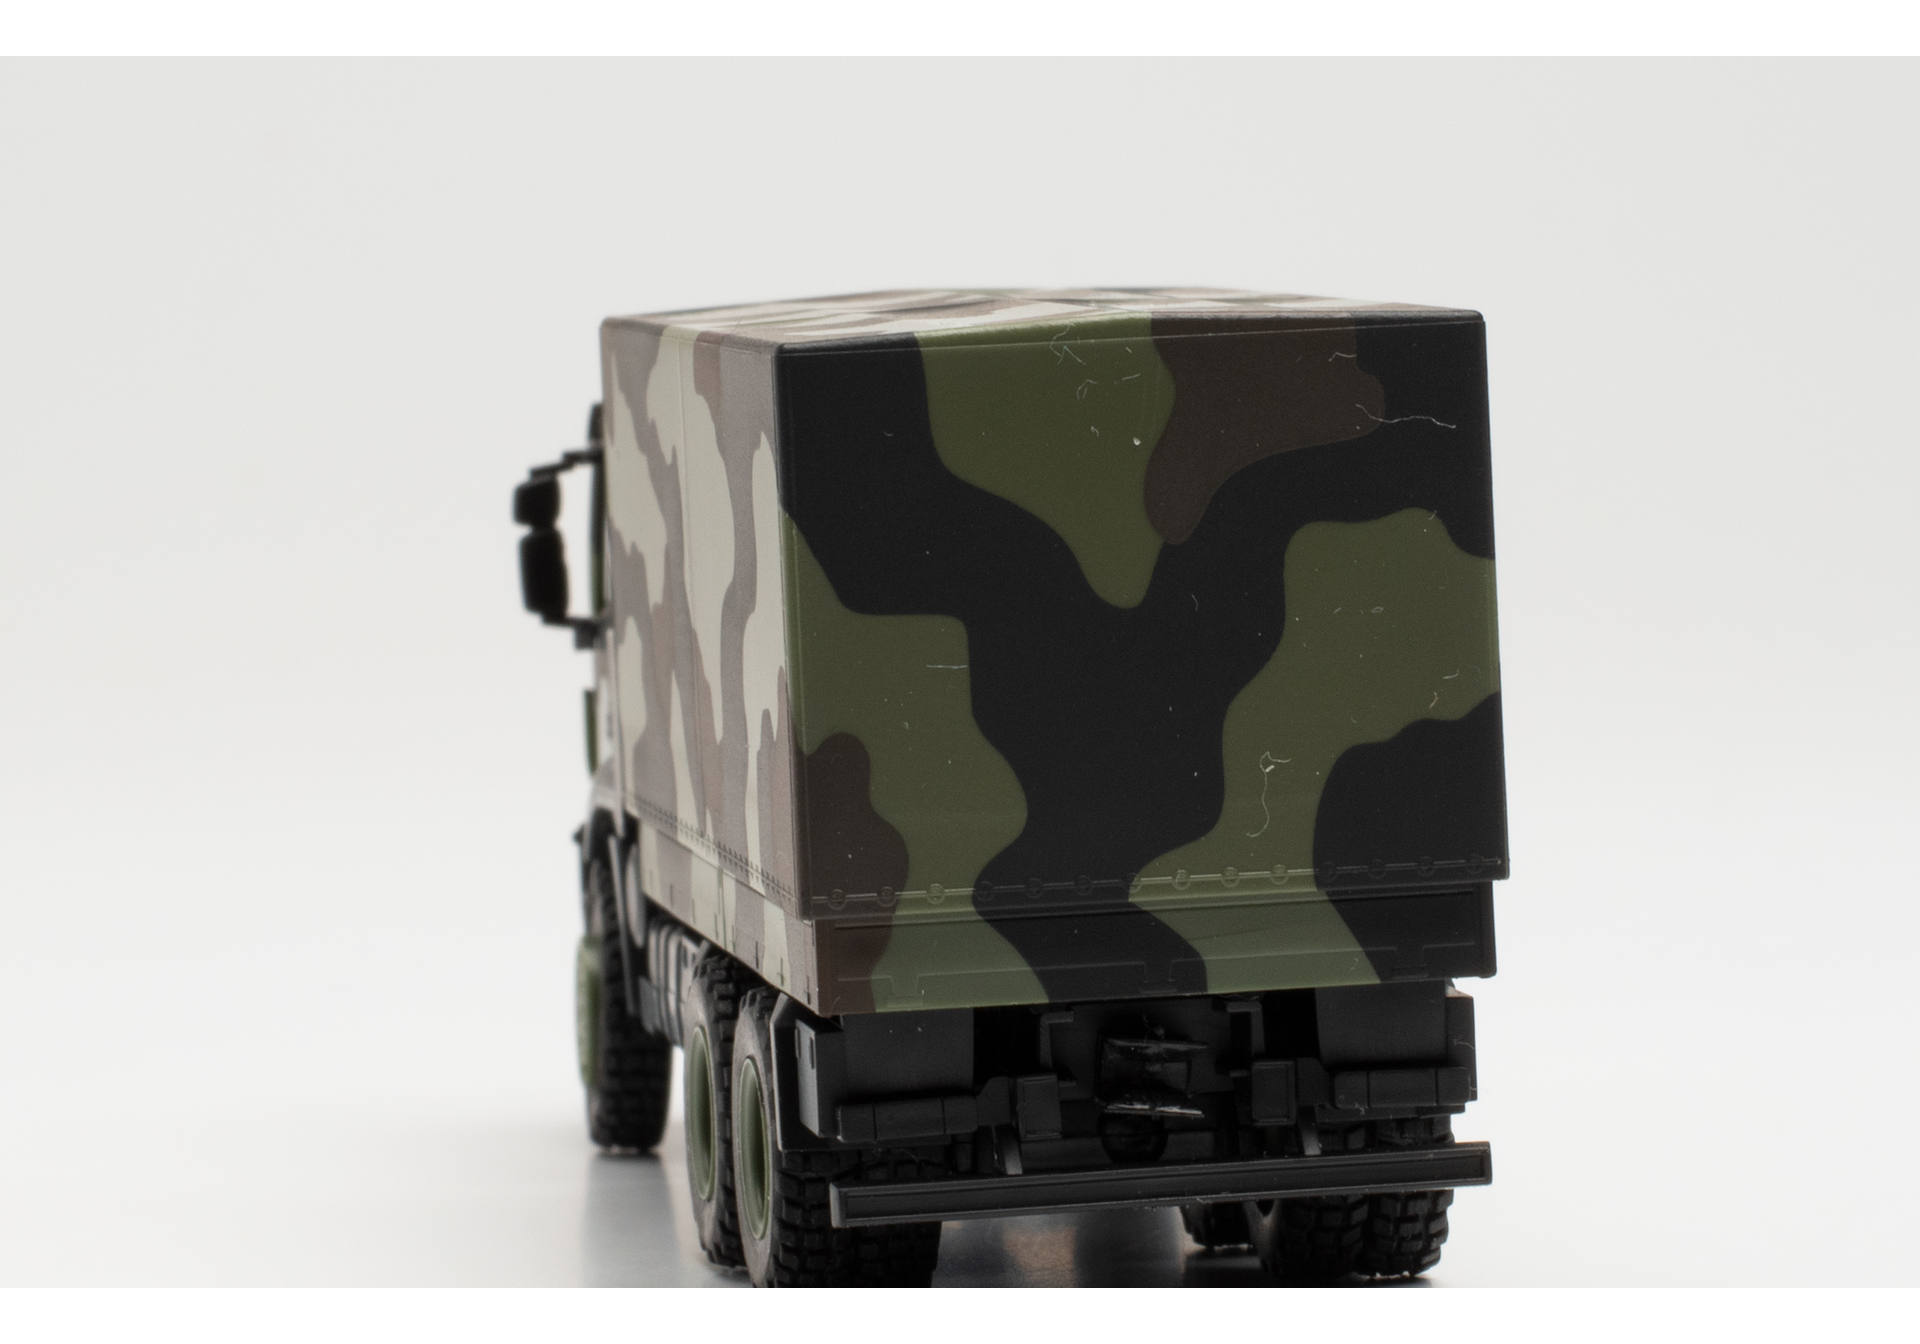 Iveco Trakker 6x6 with interchangeable body camouflage design „Bundeswehr“